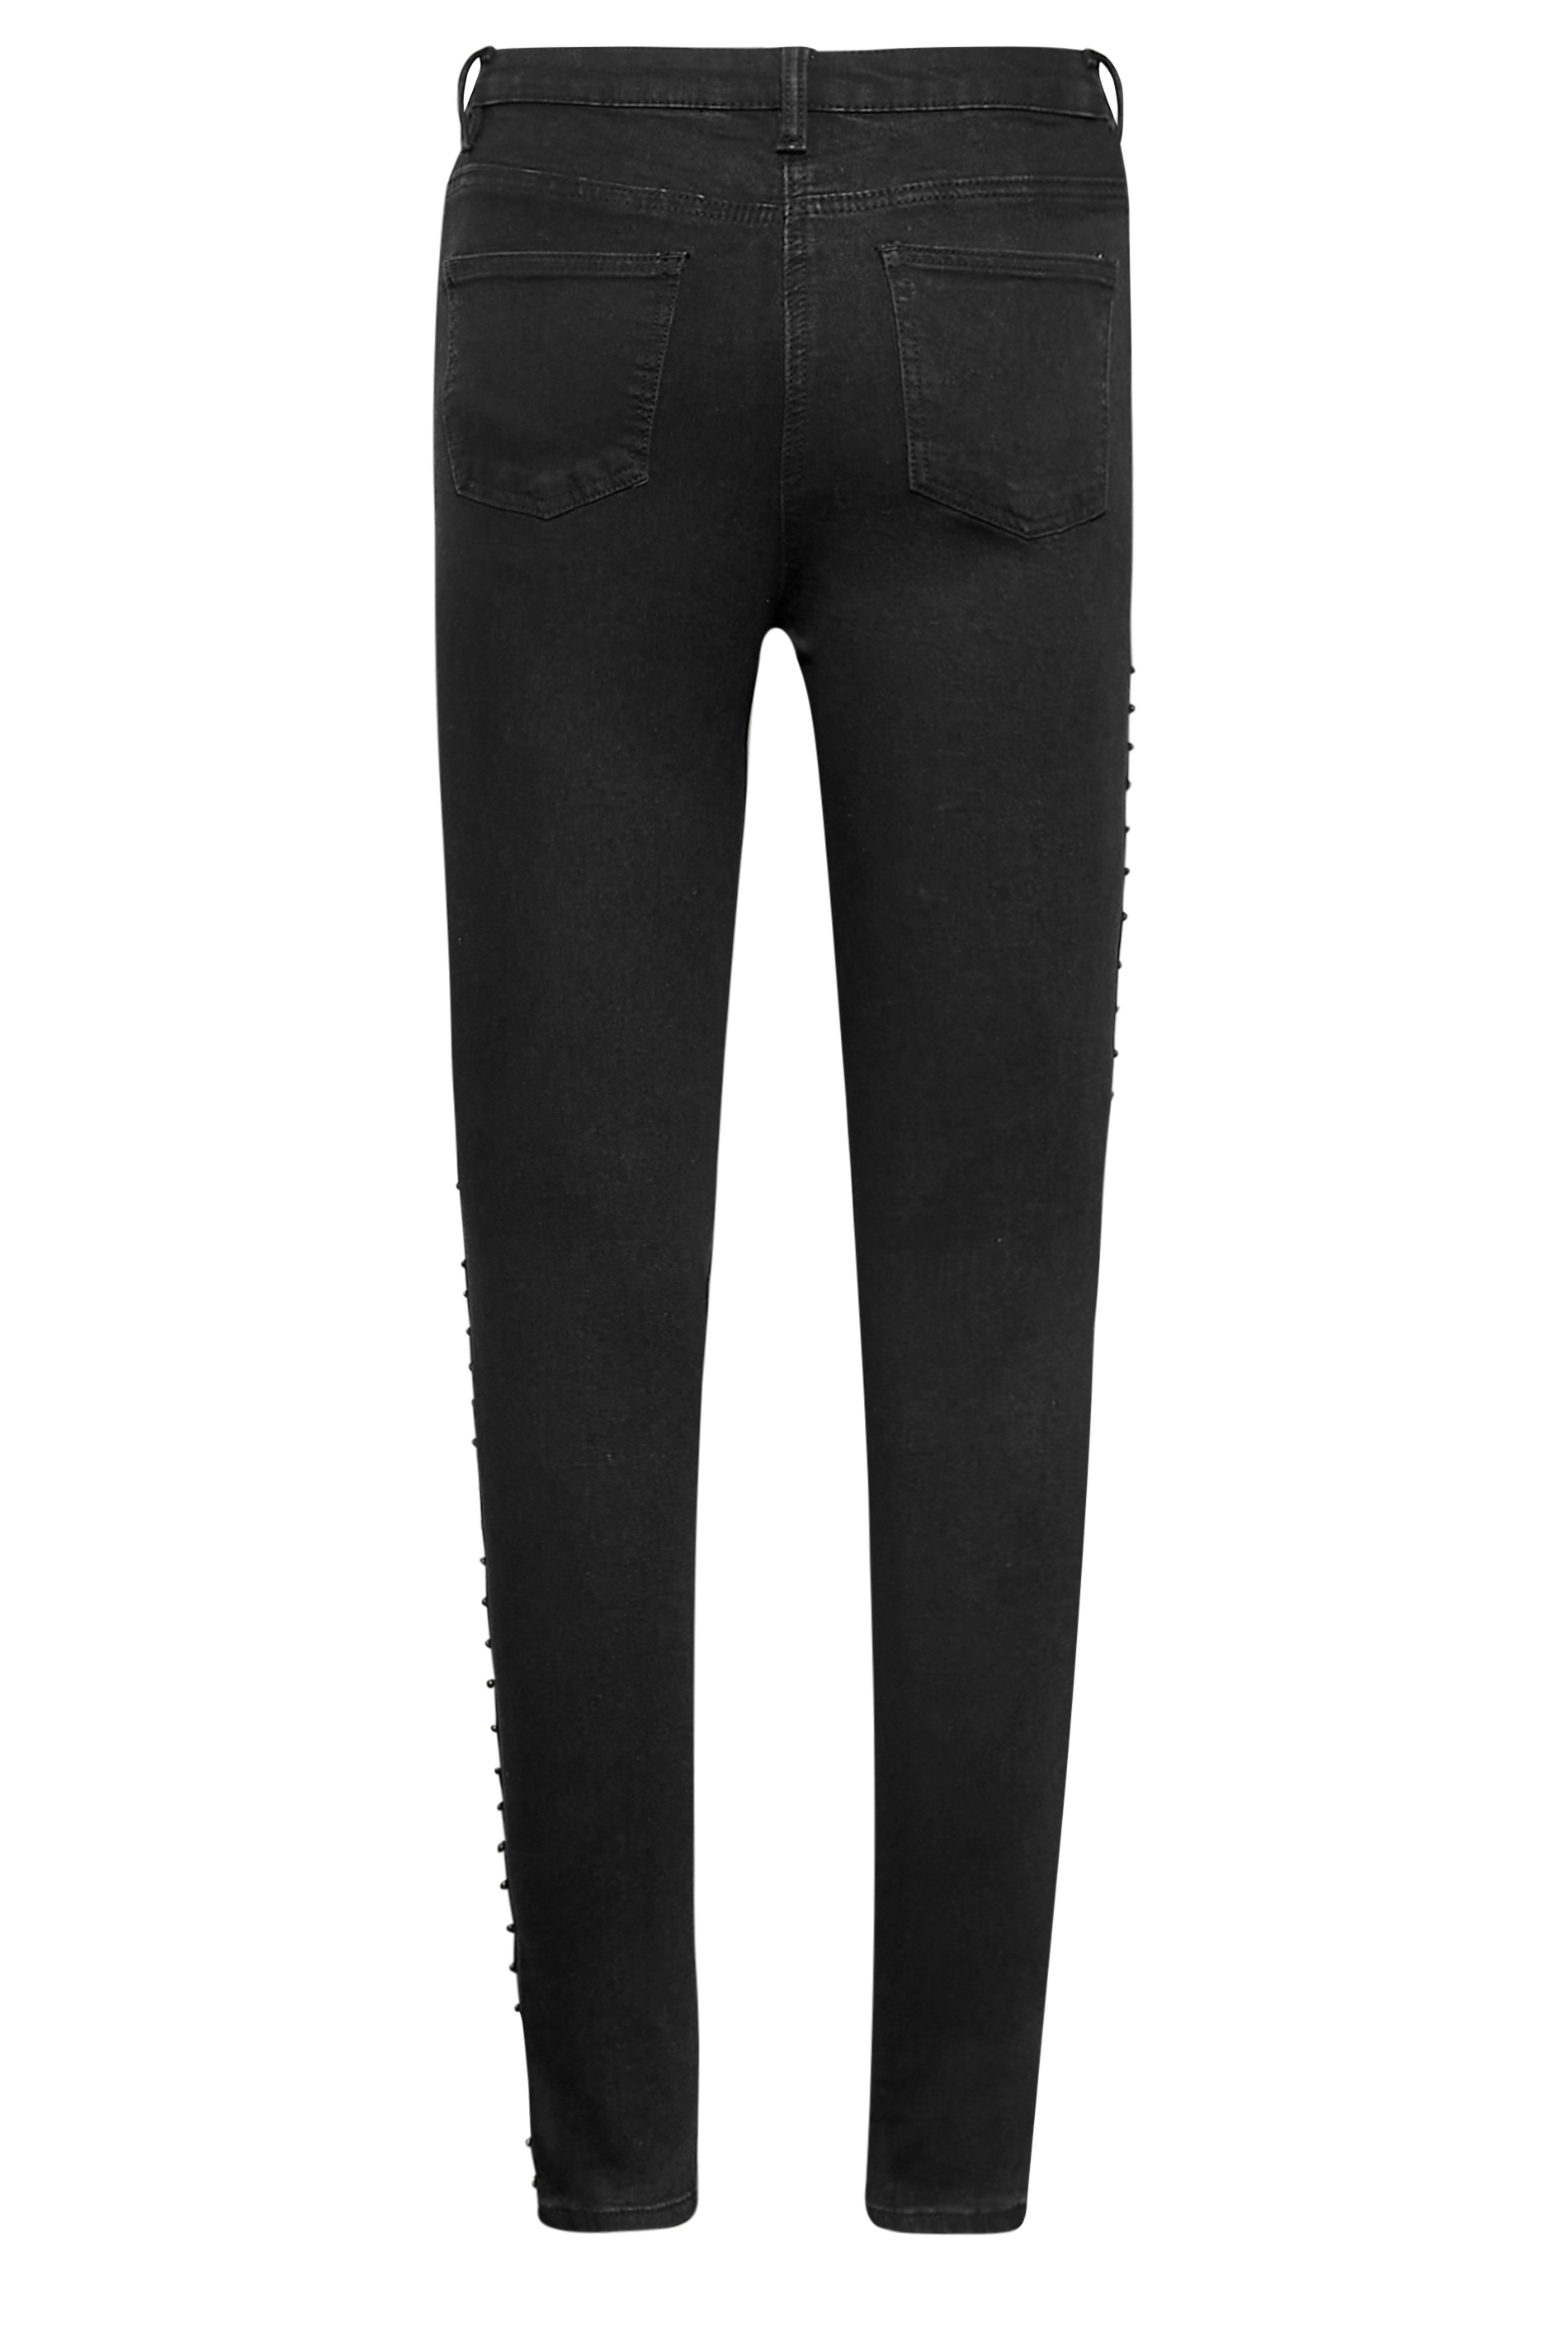 LTS Tall Women's Black Studded AVA Skinny Jeans | Long Tall Sally 3